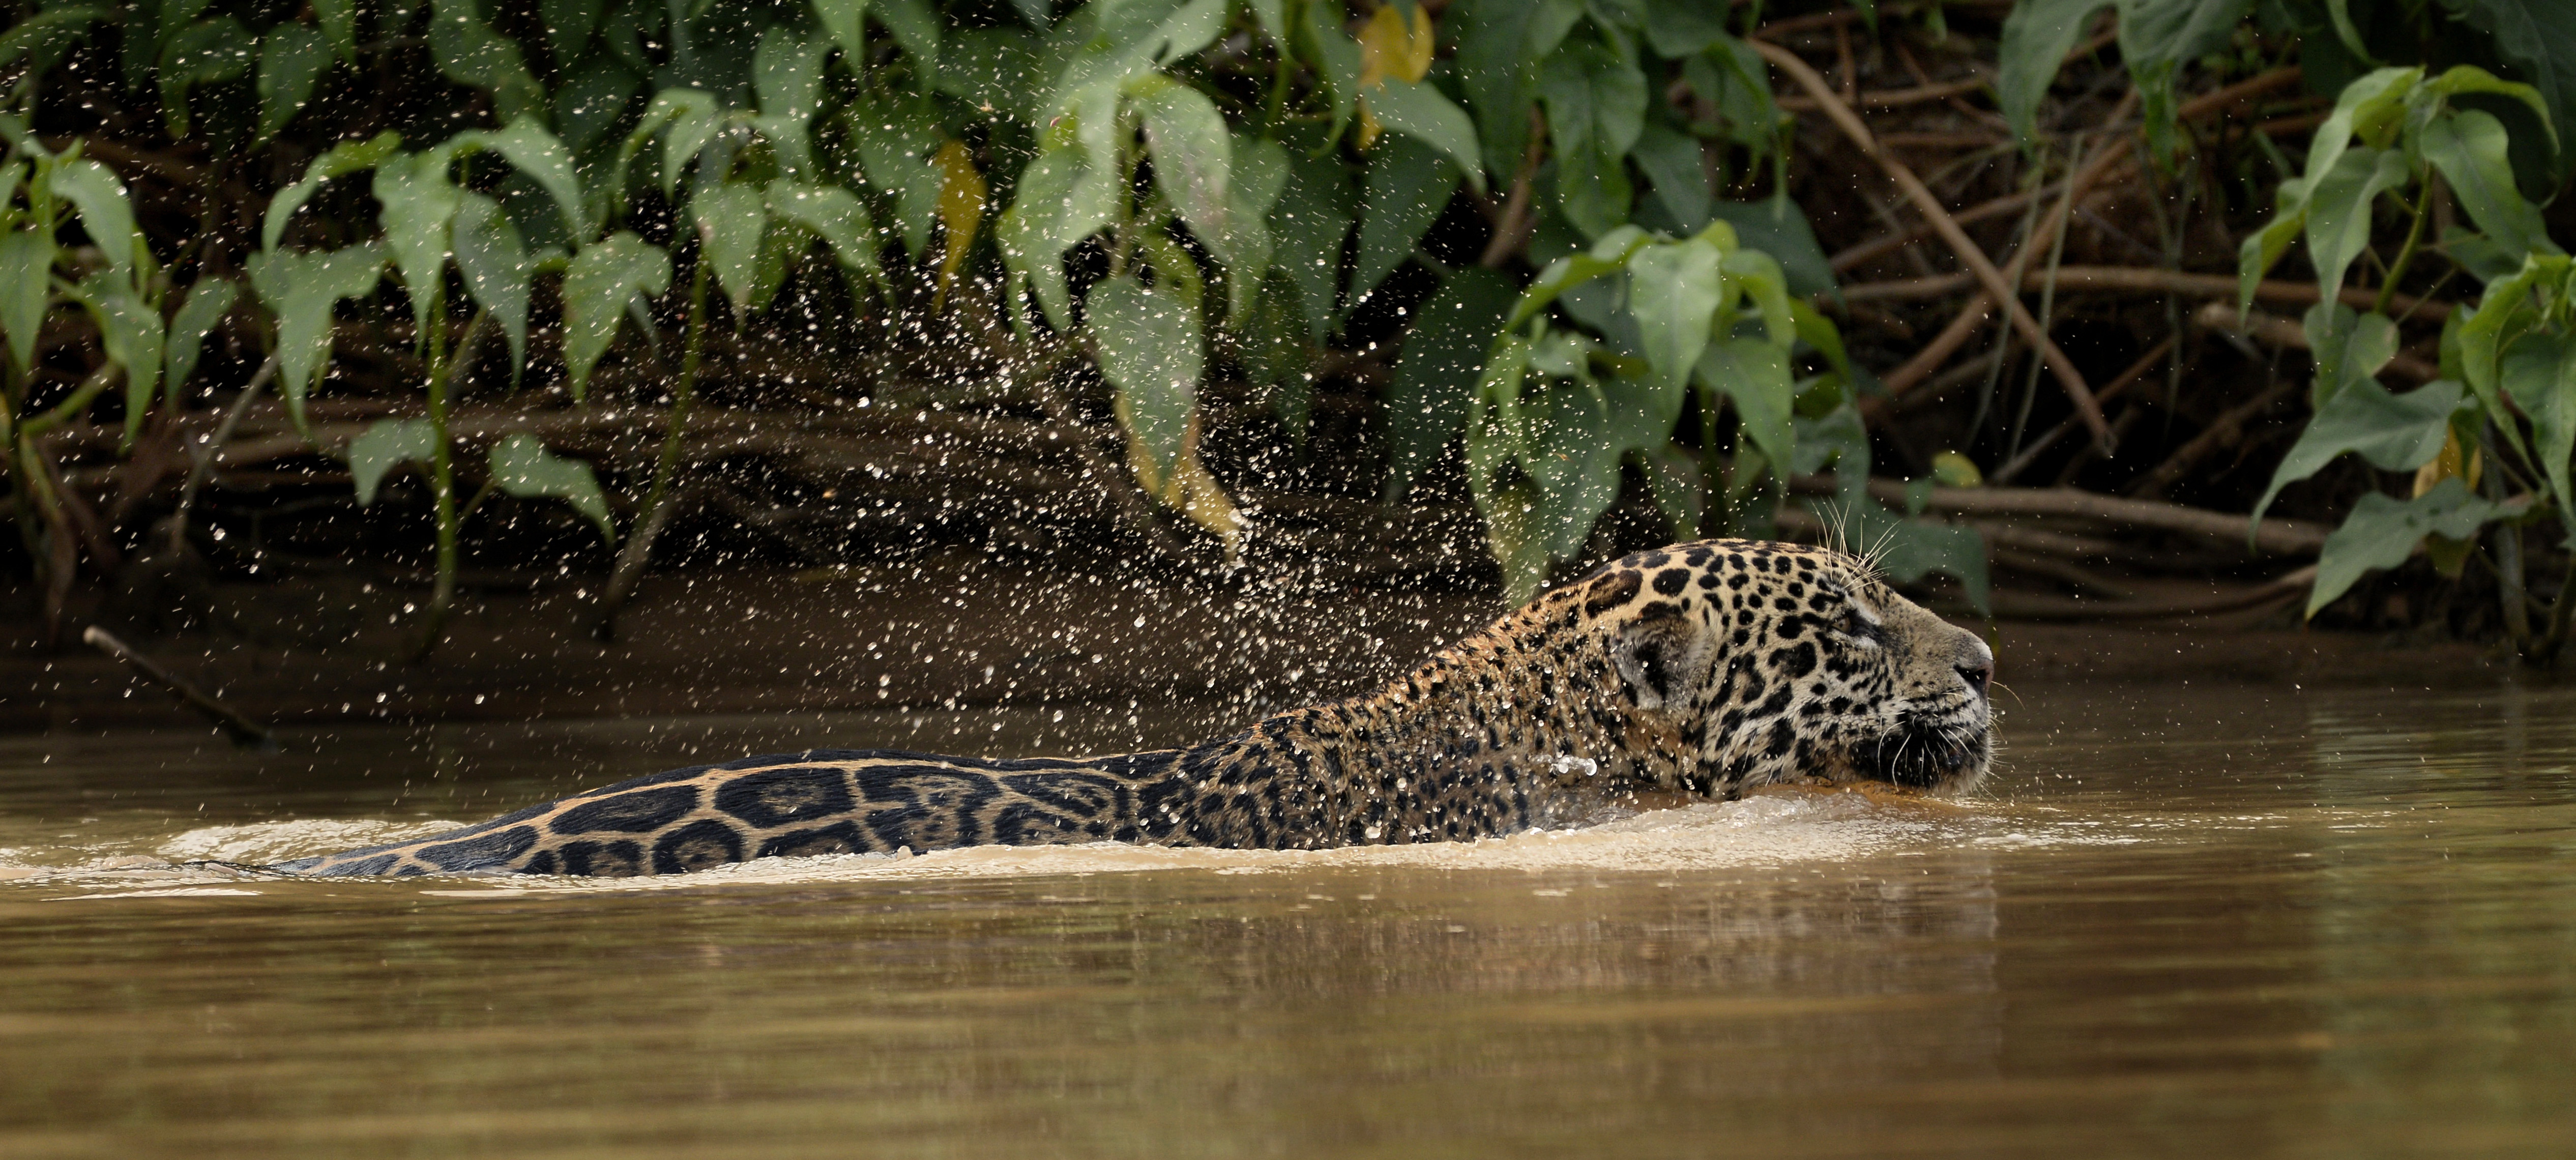 Jaguars, an increasing population